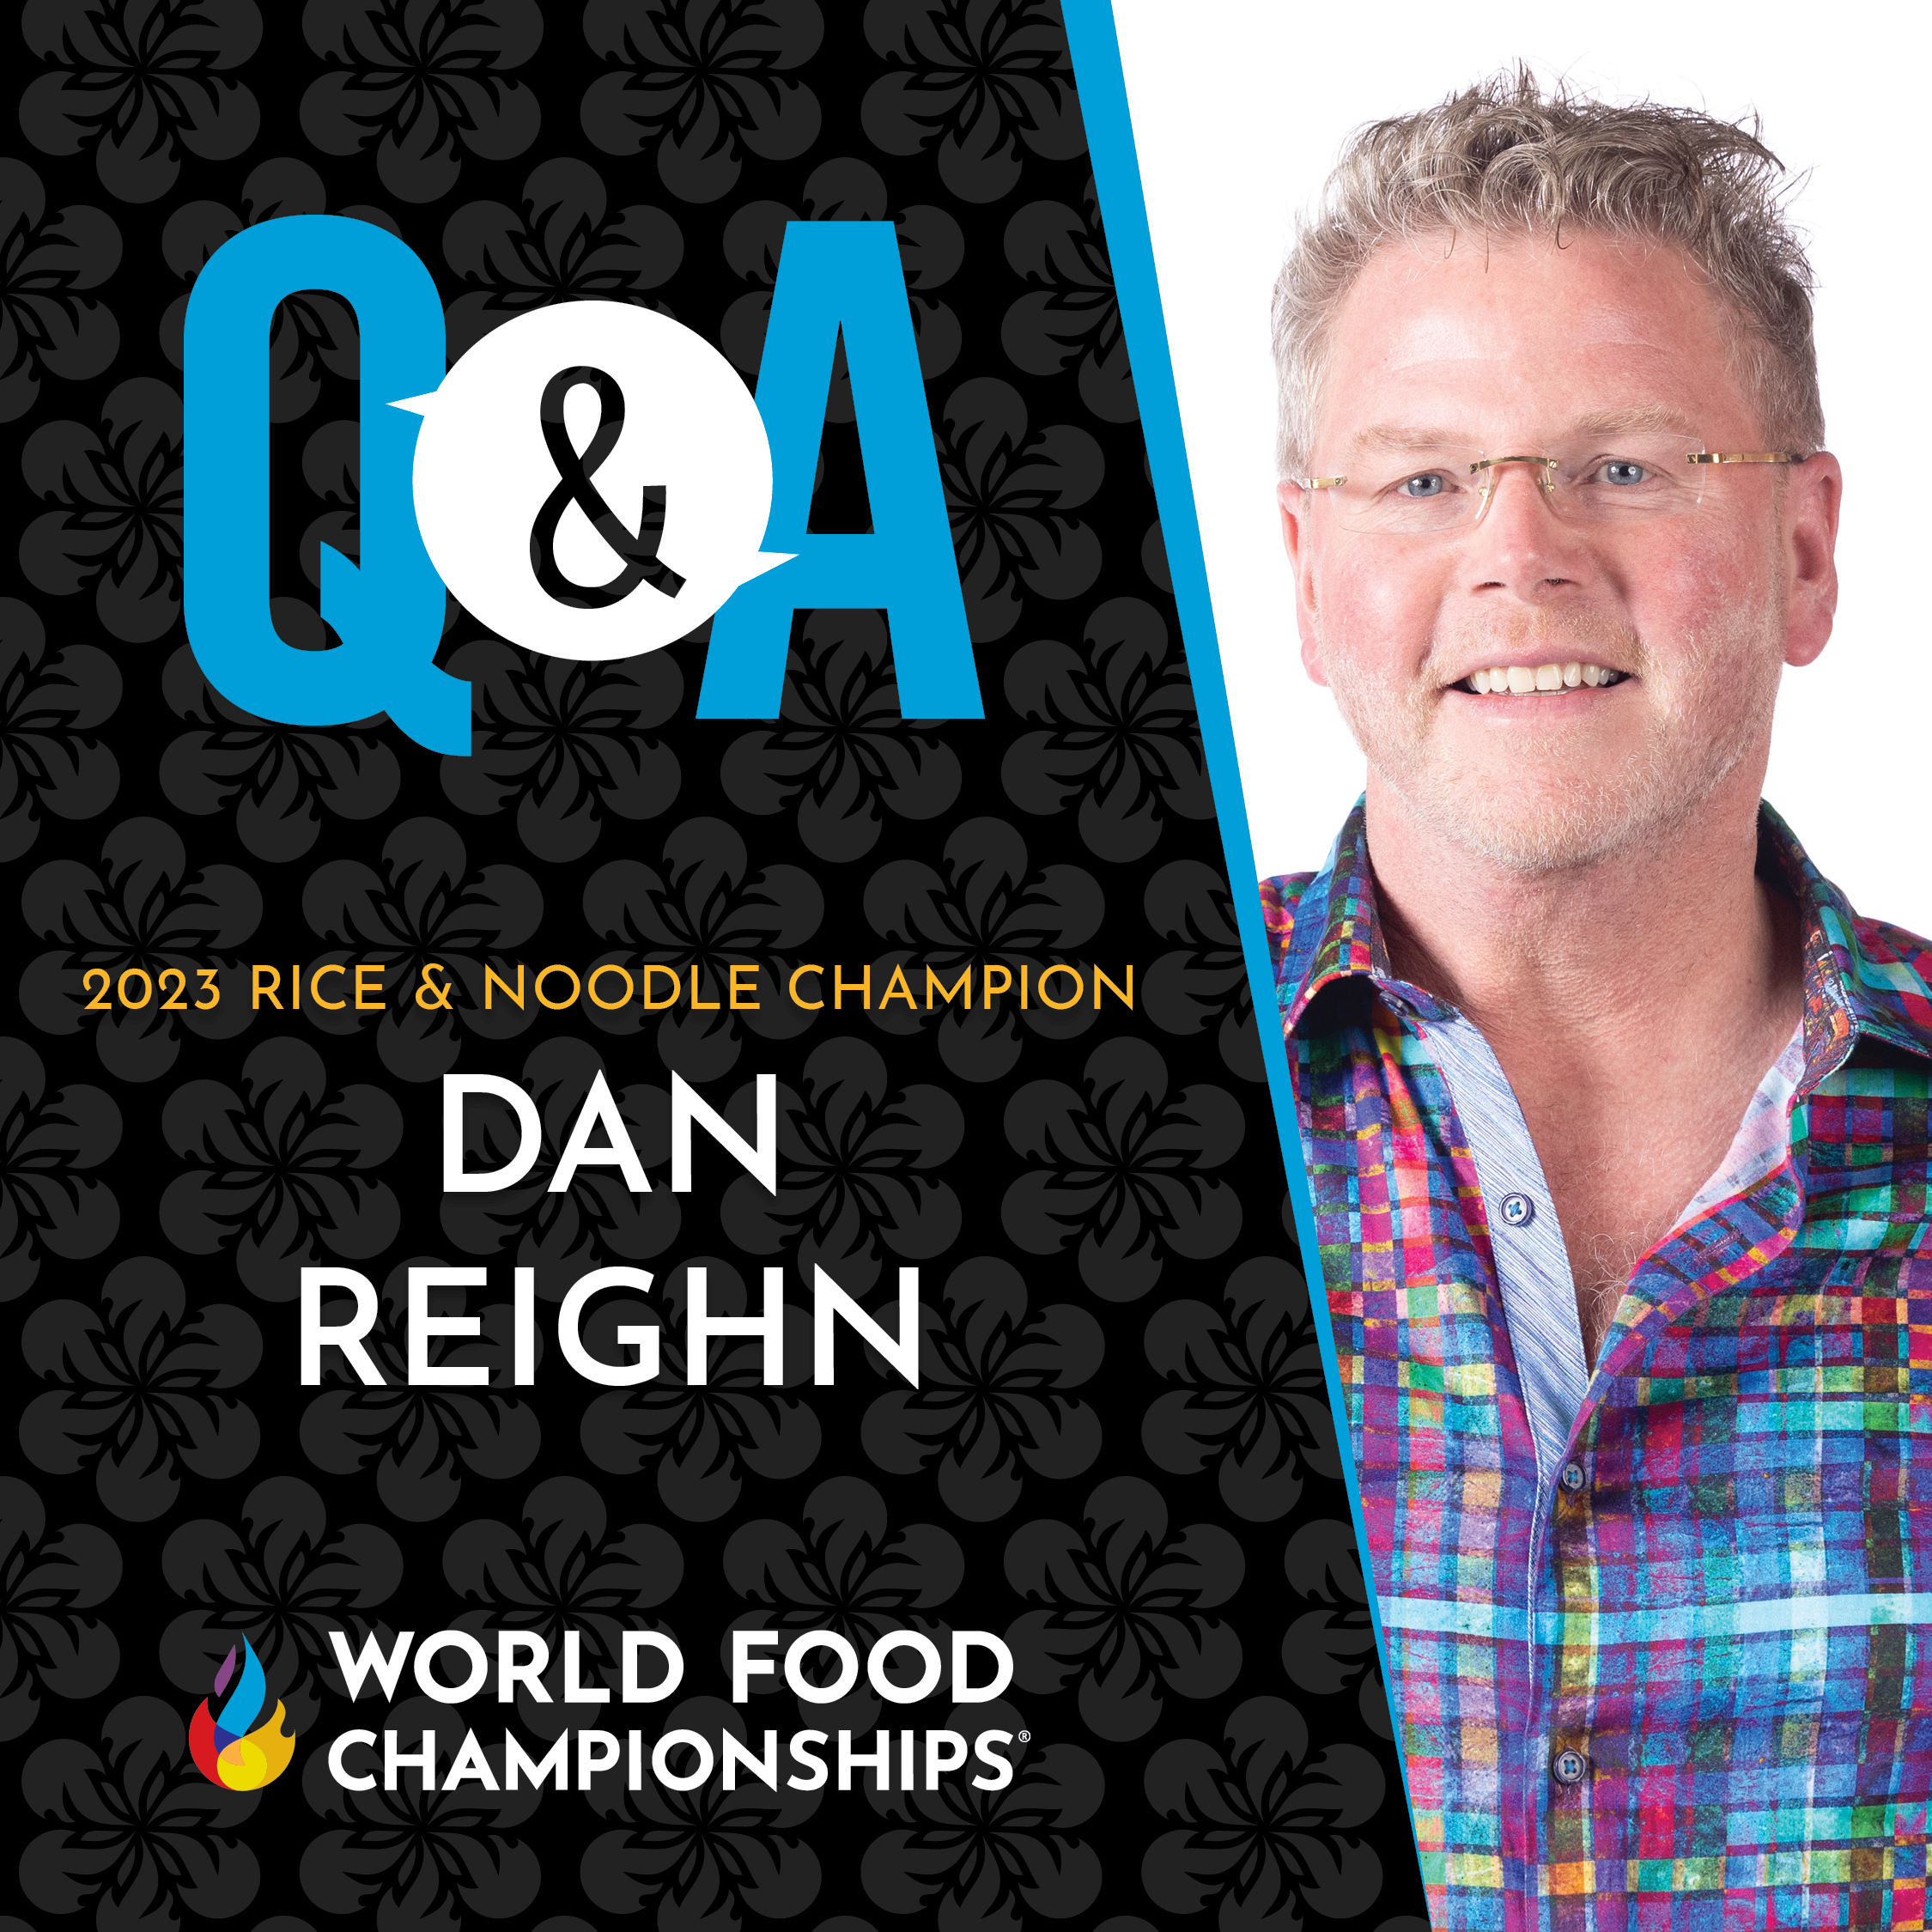 Final Table Q&A - Dan Reighn